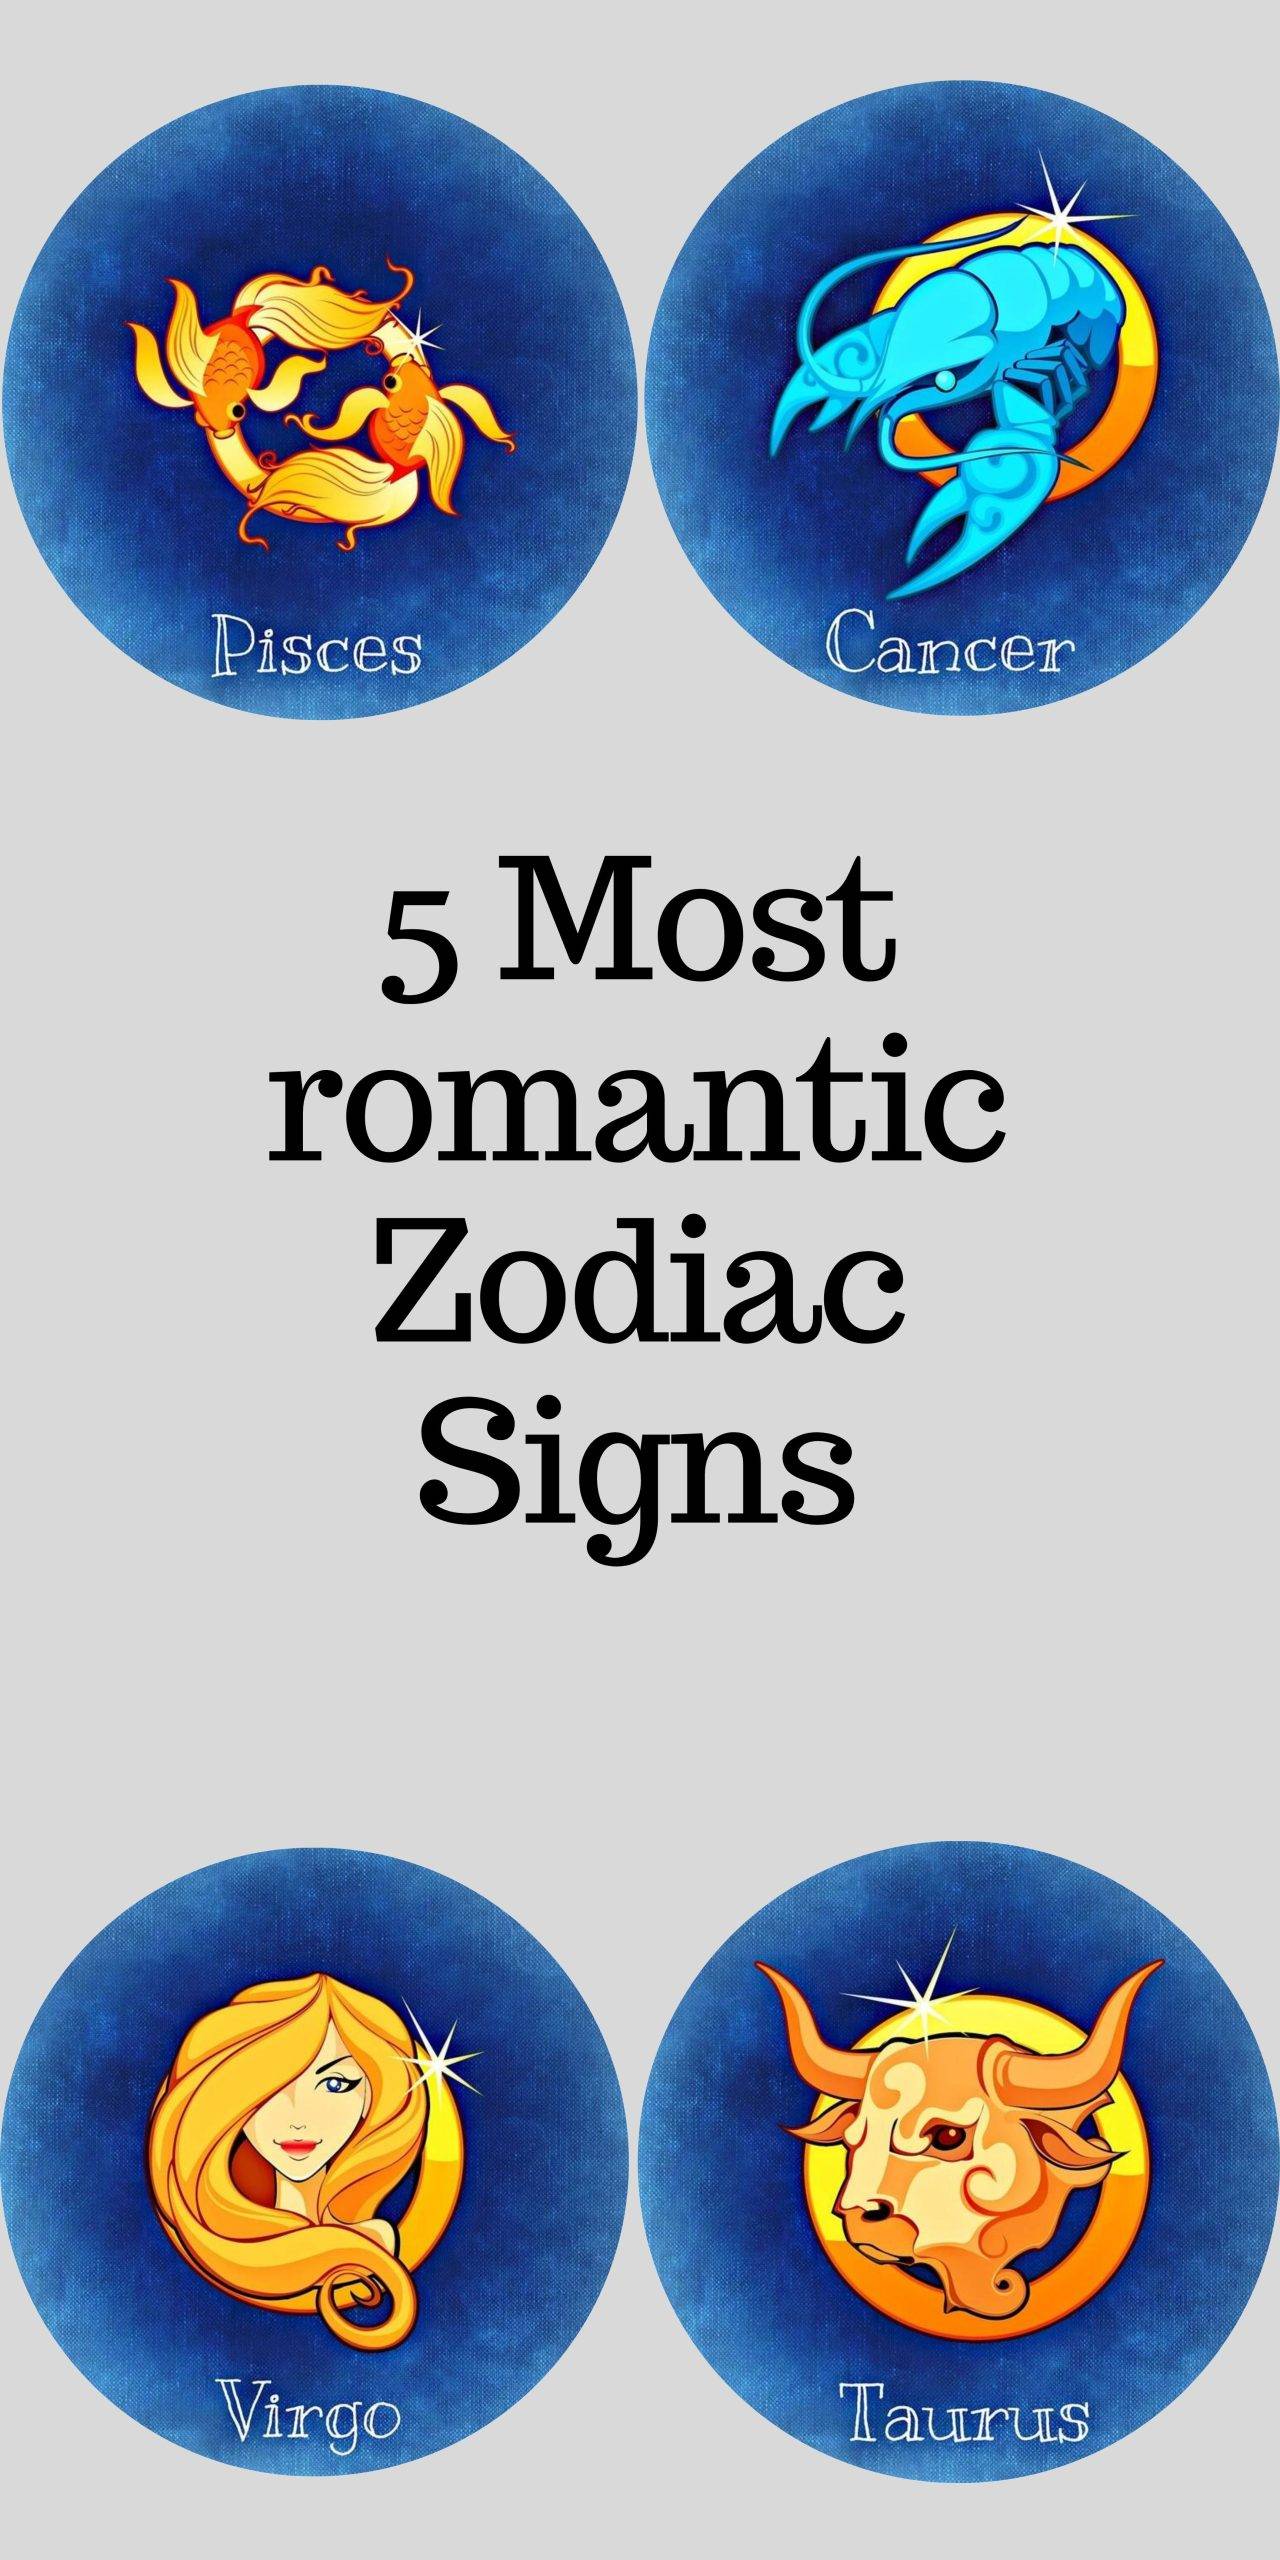 Top 5 Most Romantic Zodiac Signs